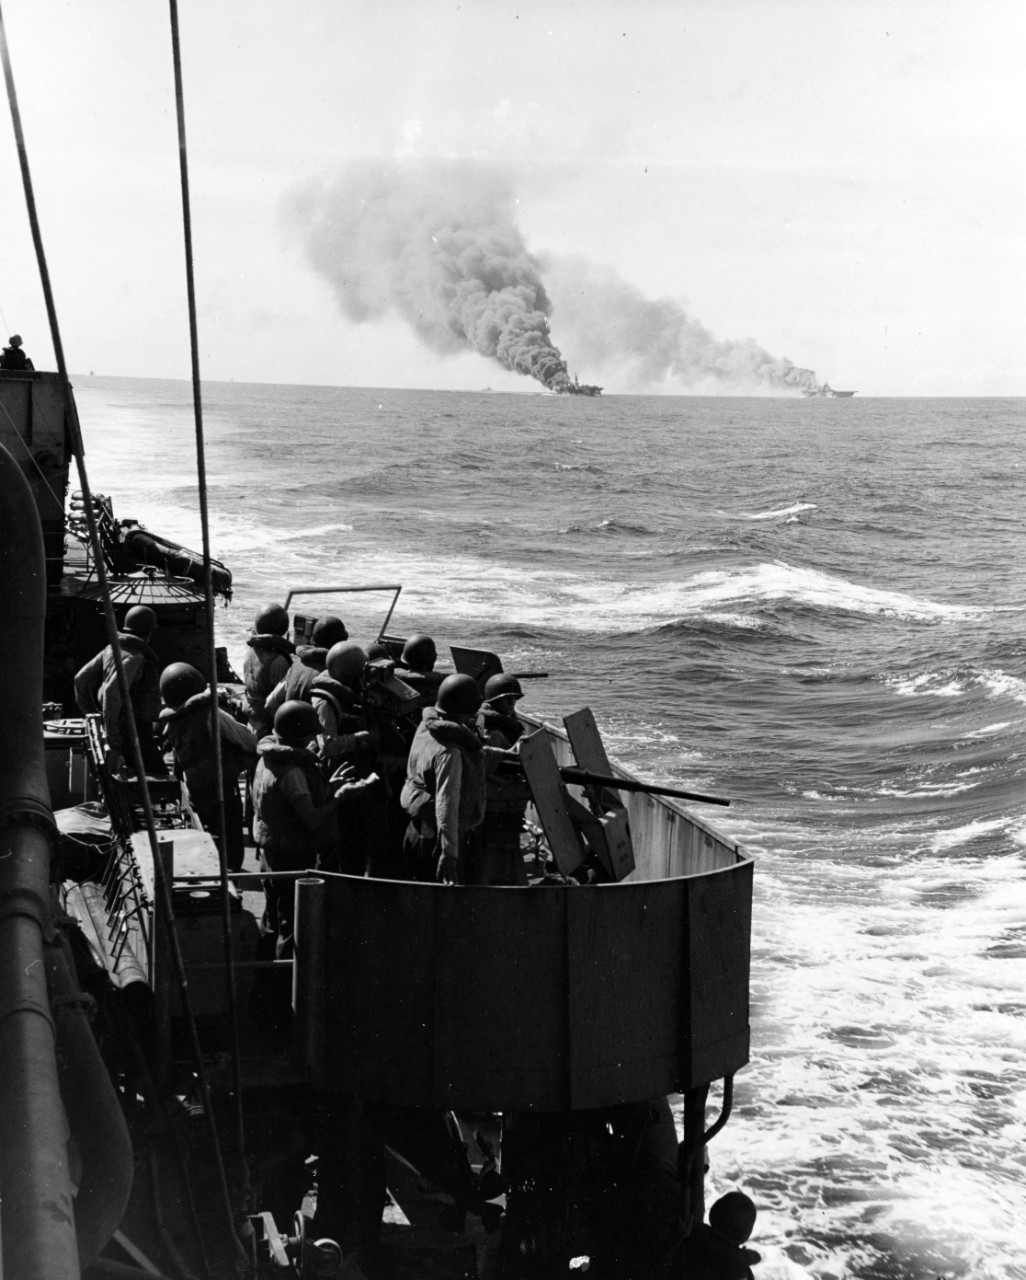 USS Belleau Wood (CVL-24) and USS Franklin (CV-13) on fire